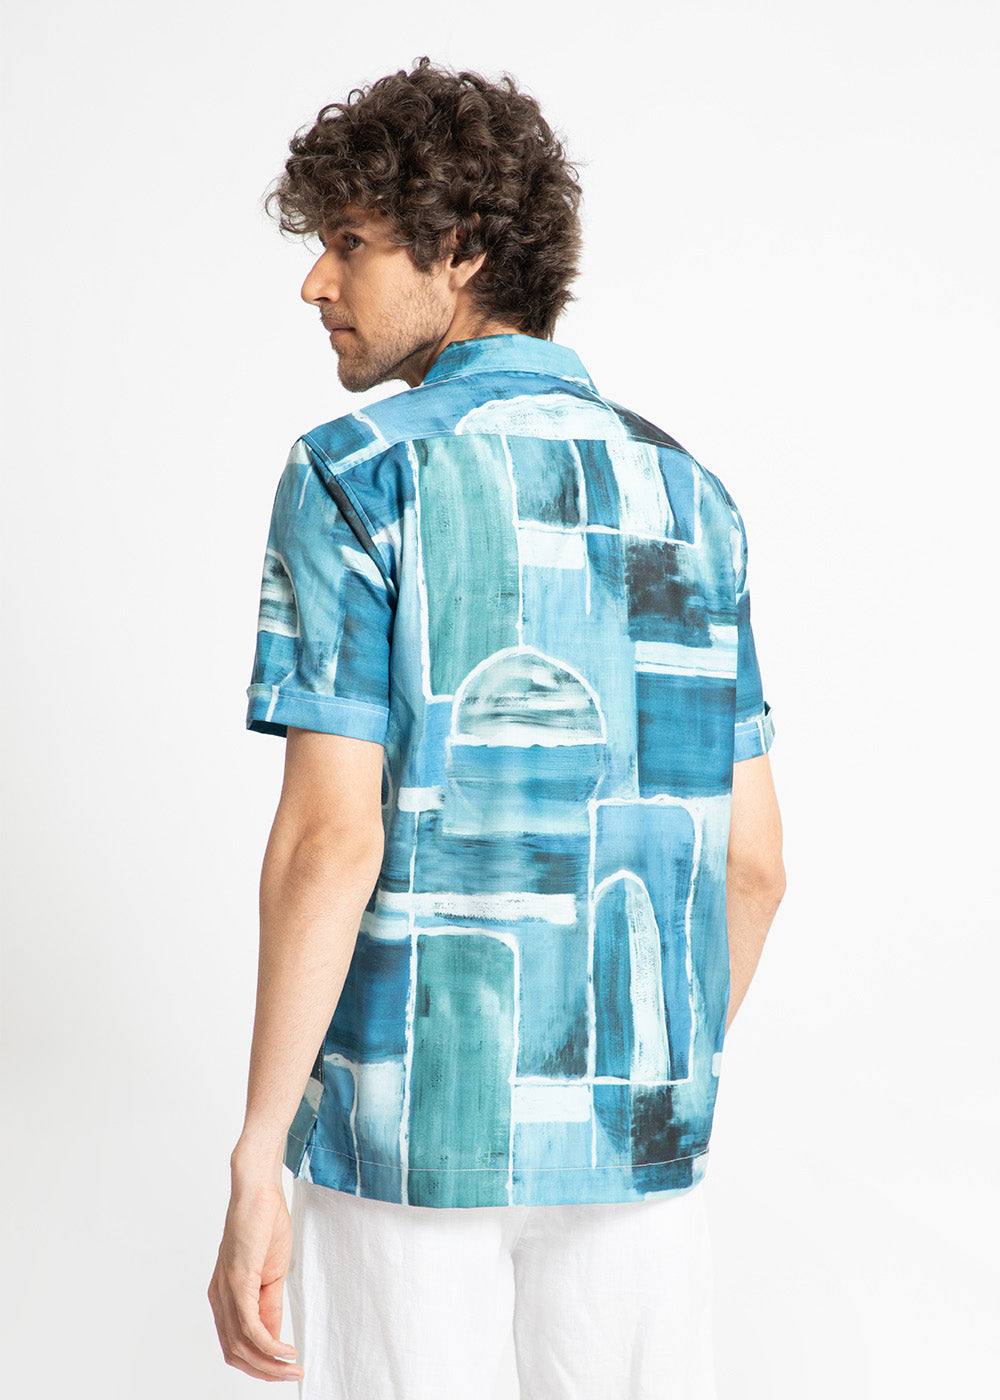 Abstract Art Half Sleeve Shirt